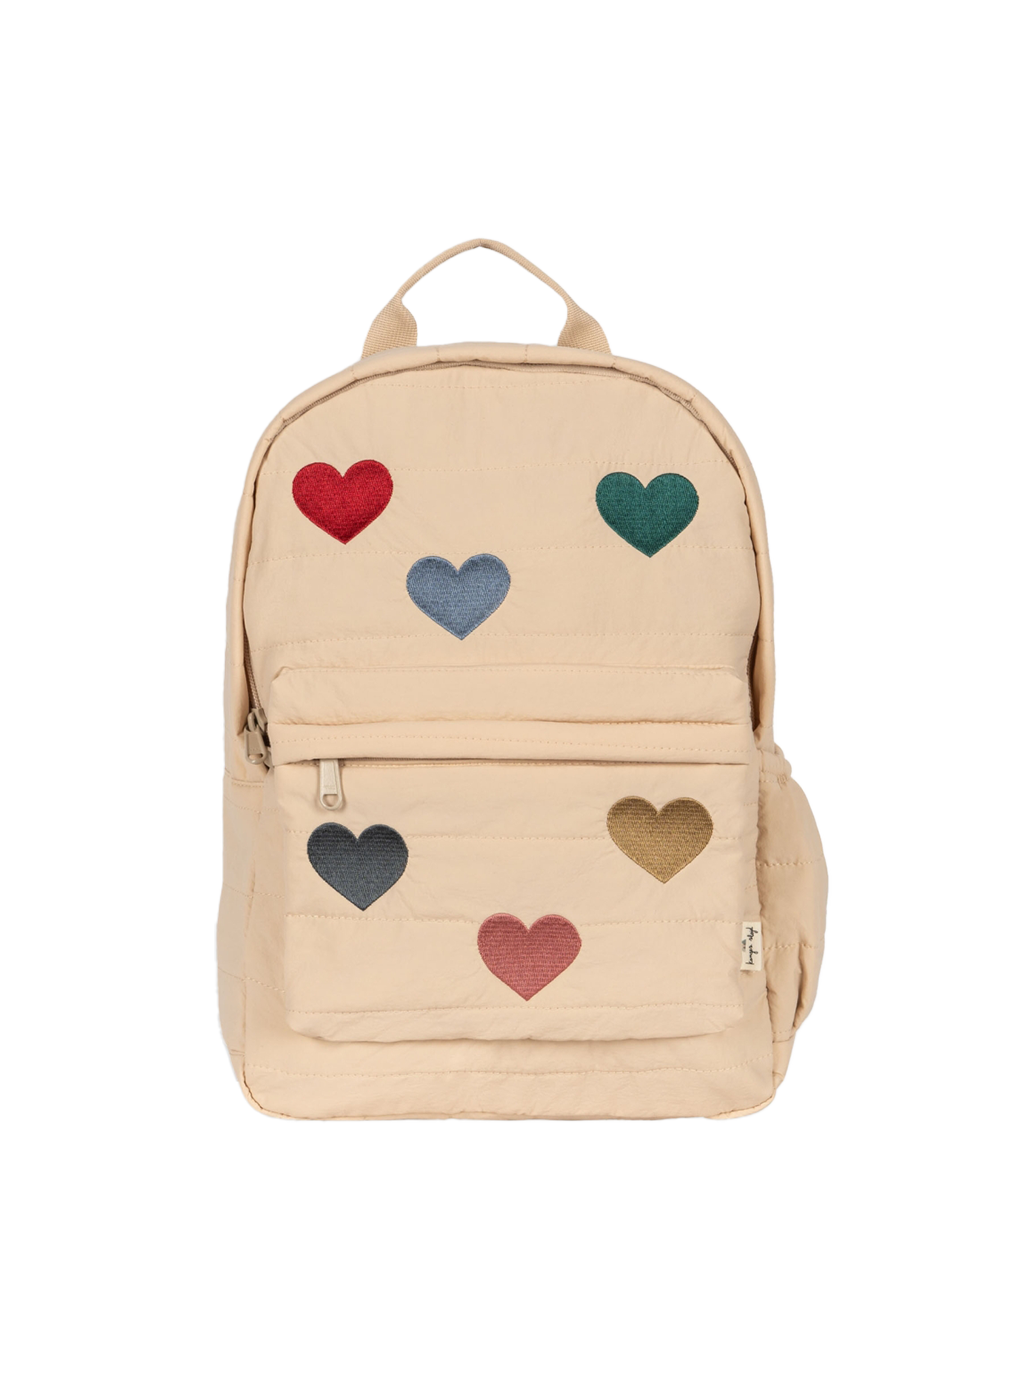 Juno backpack